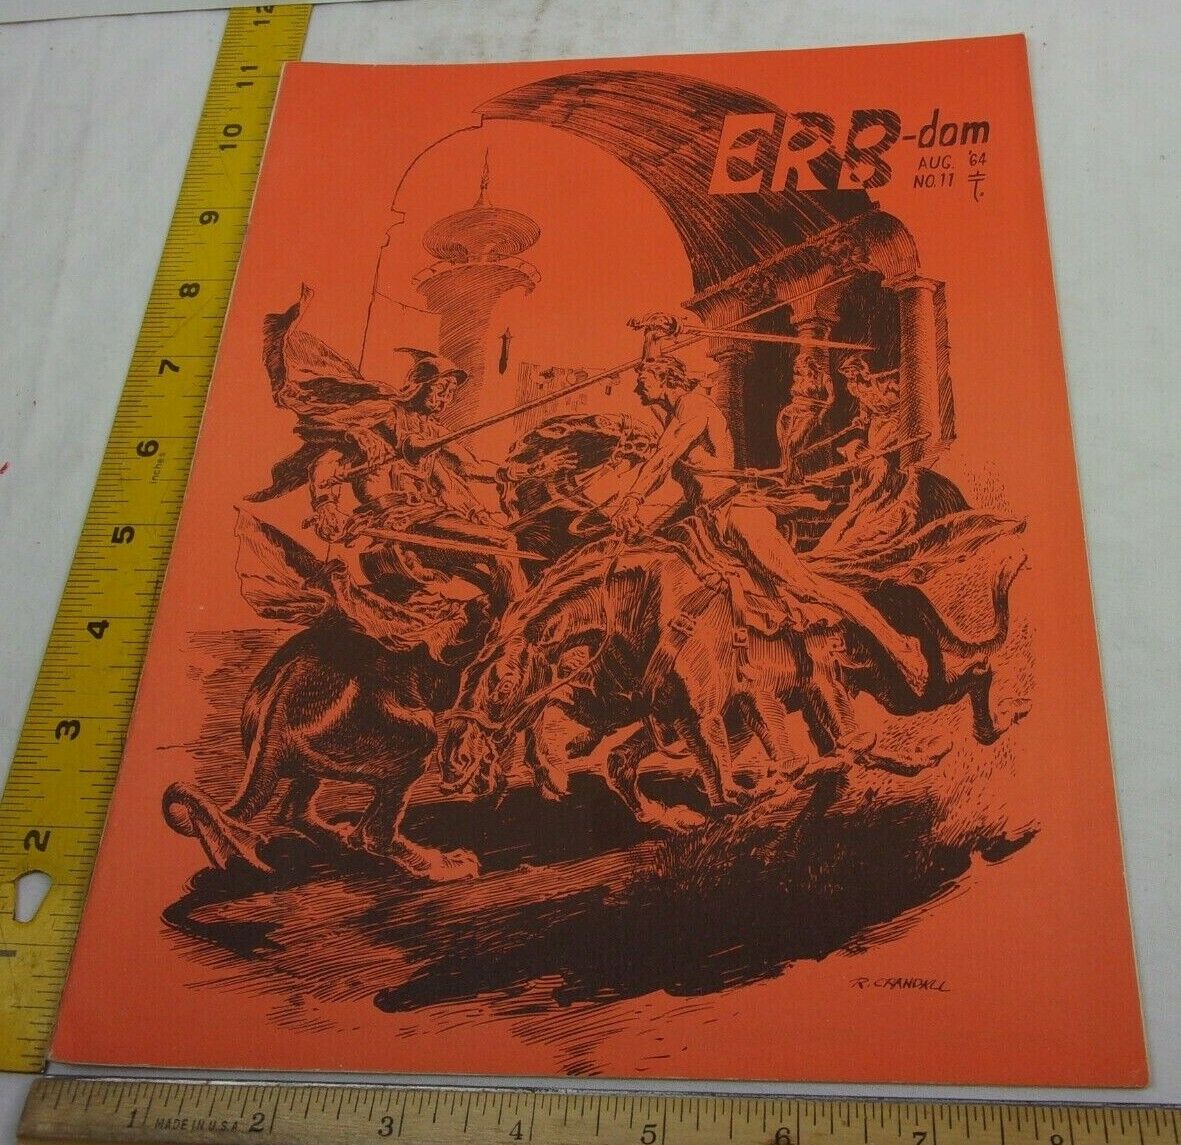 ERB-dom 11 Edgar Rice Burroughs fanzine 1964 VF+ Reed Crandall art Tarzan